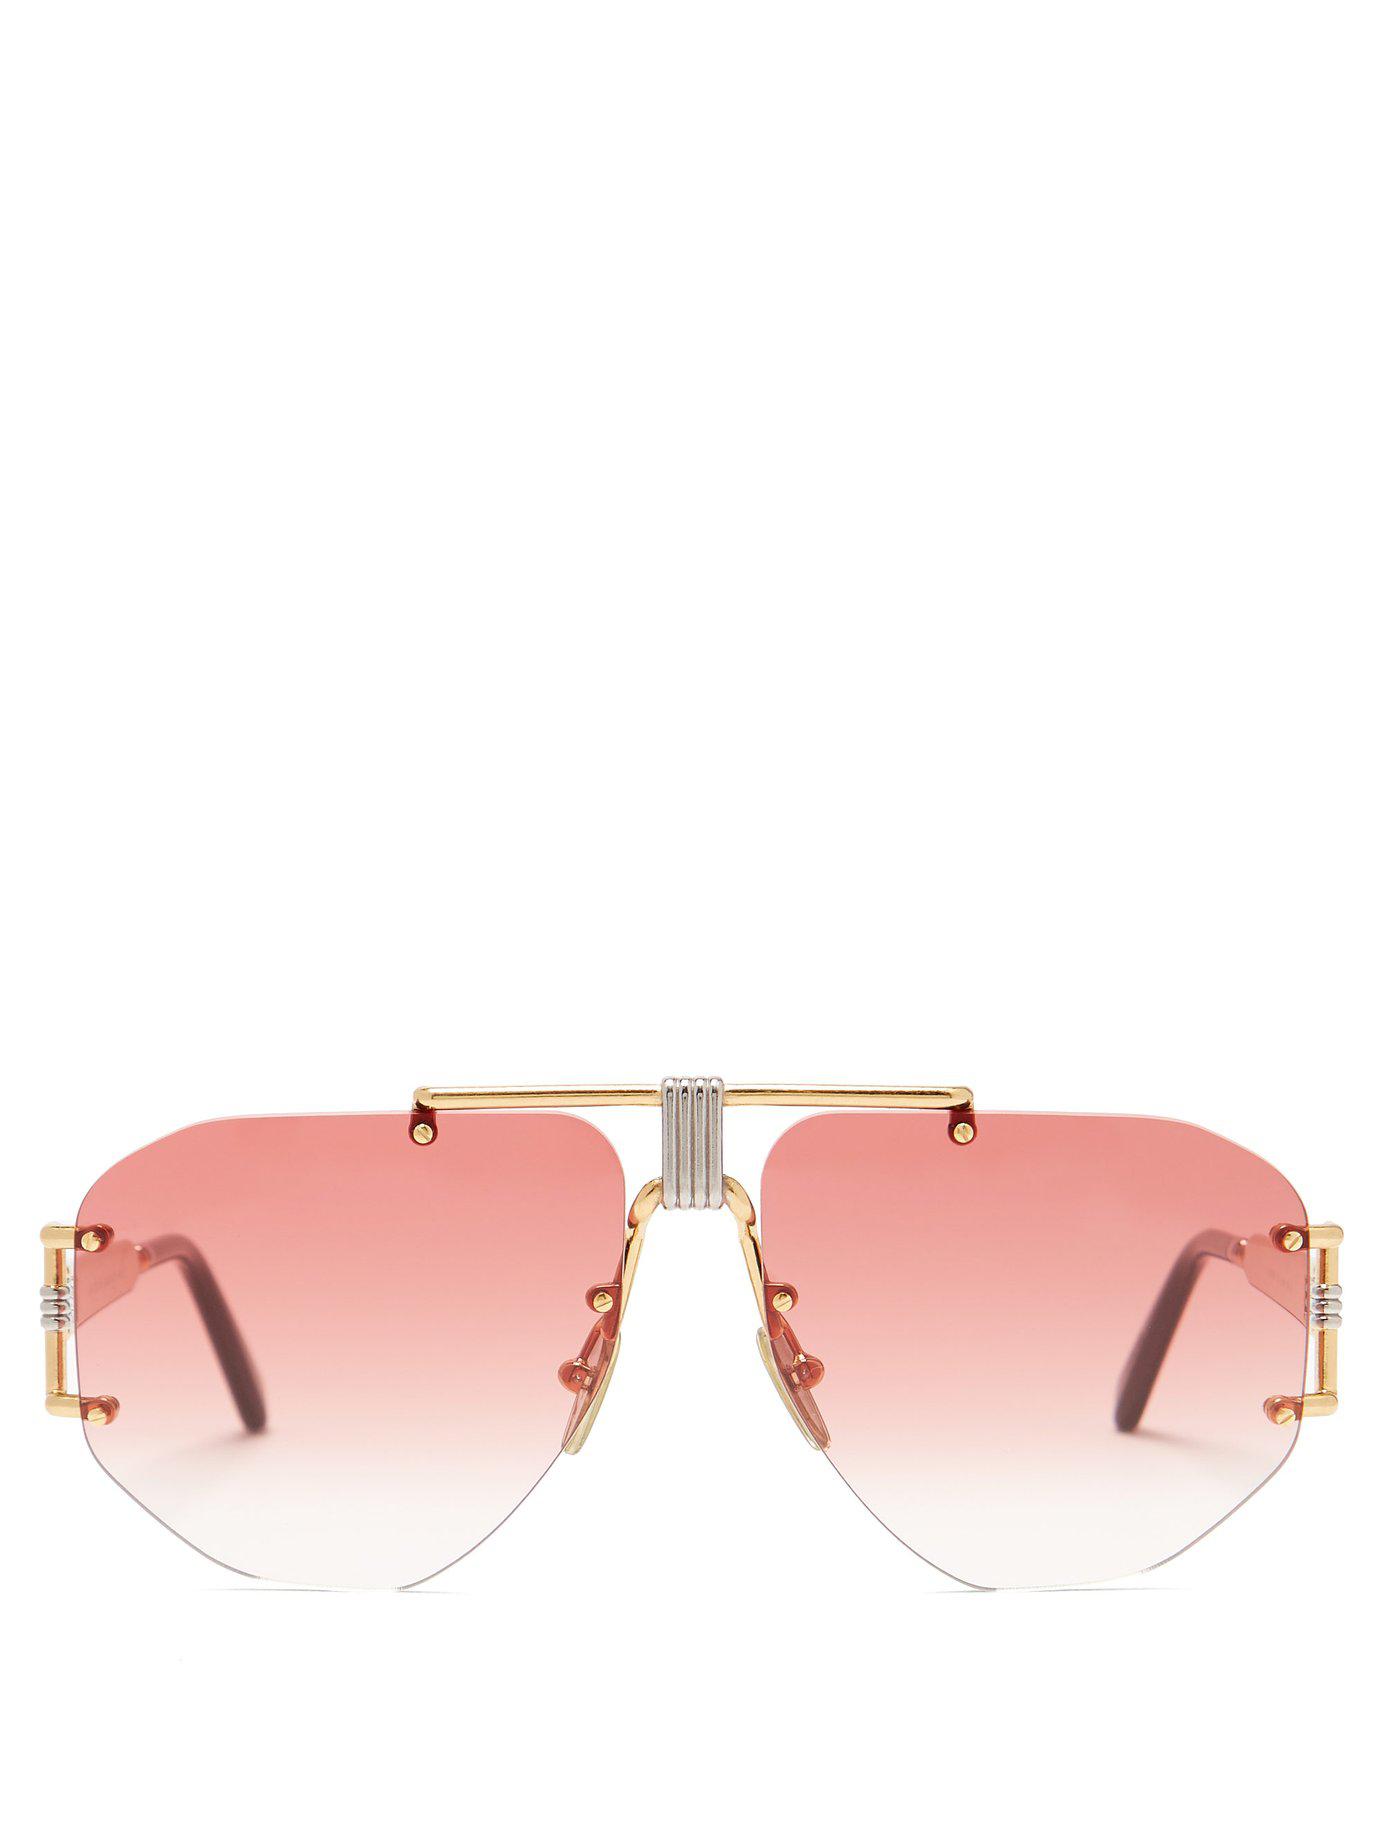 Celine Fragola Aviator Gold Tone Metal Sunglasses in Pink | Lyst